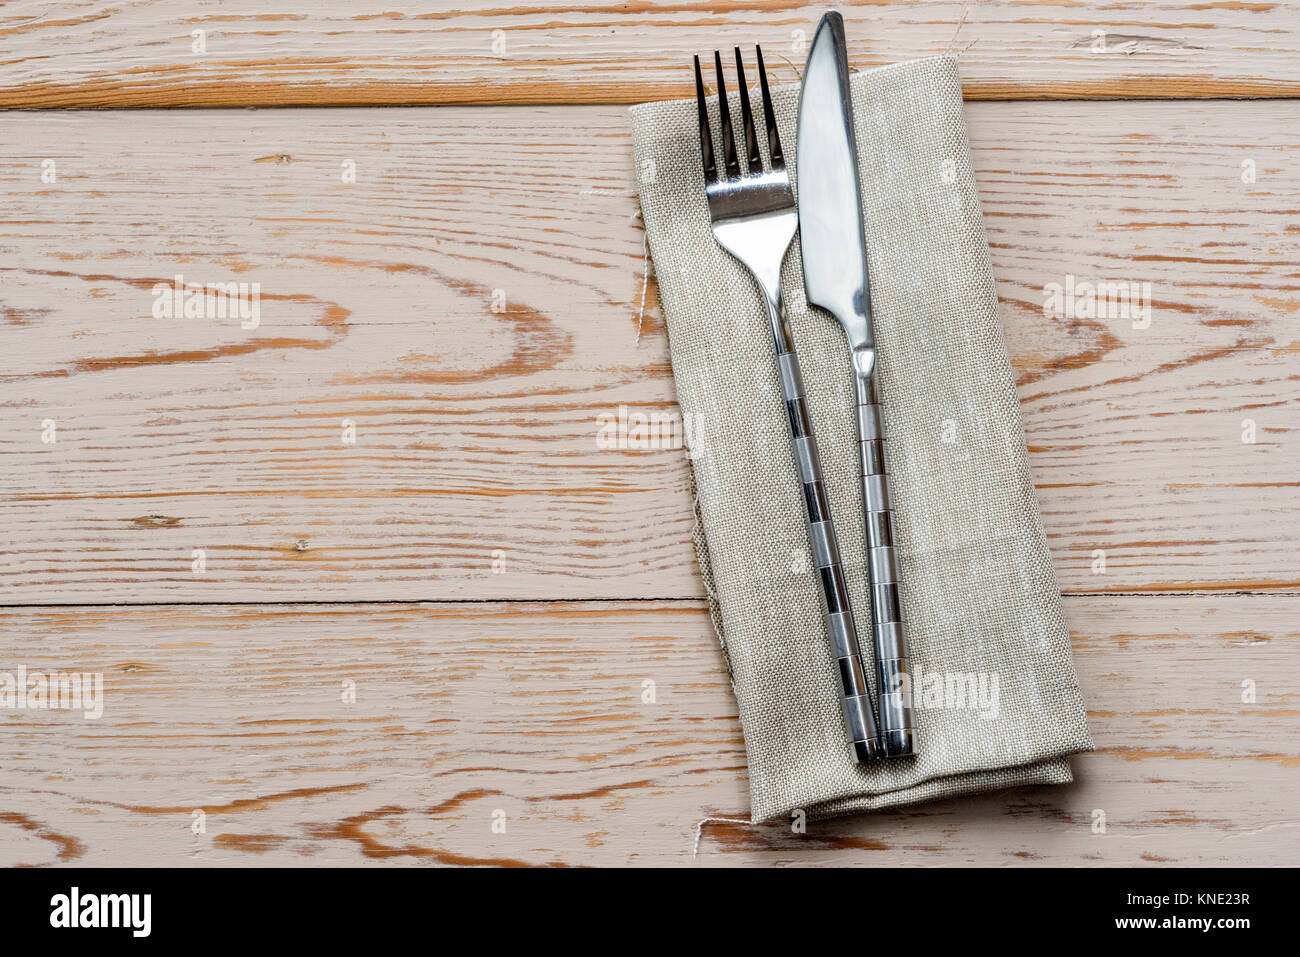 Knife, fork, napkin, serviette, place or table setting. Stock Photo